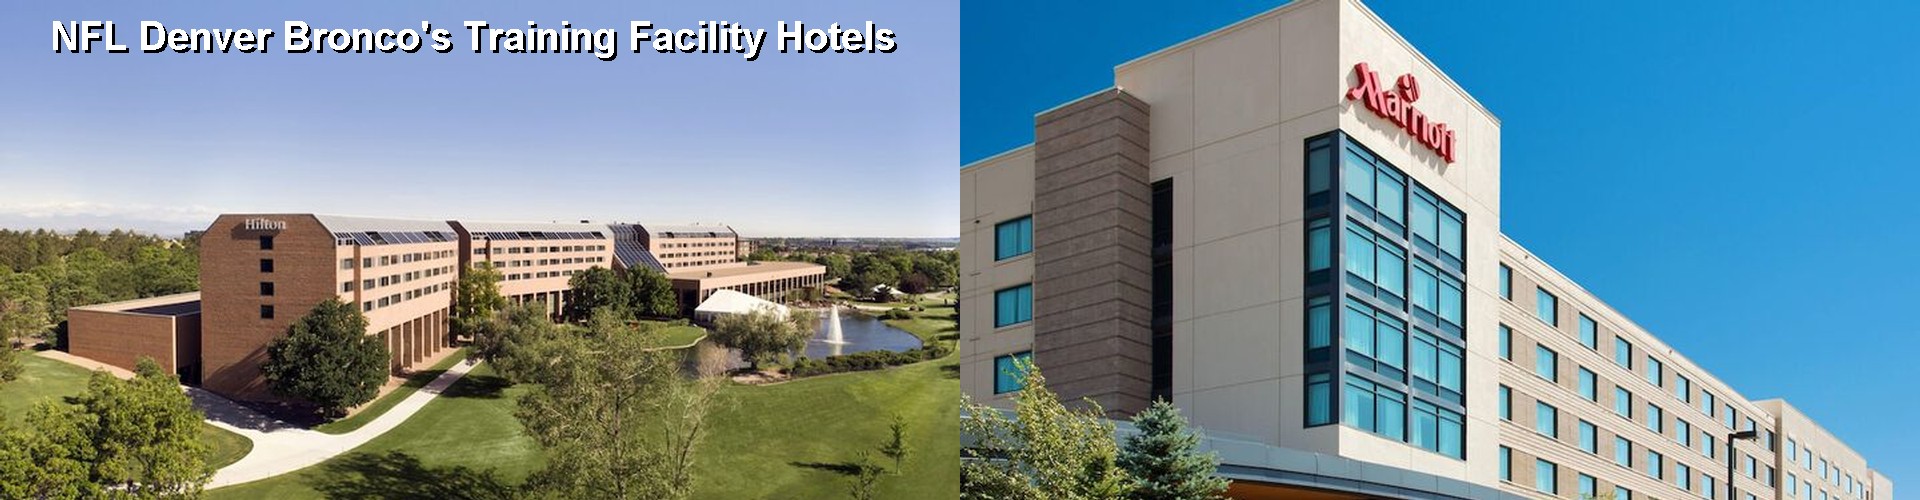 5 Best Hotels near NFL Denver Bronco's Training Facility